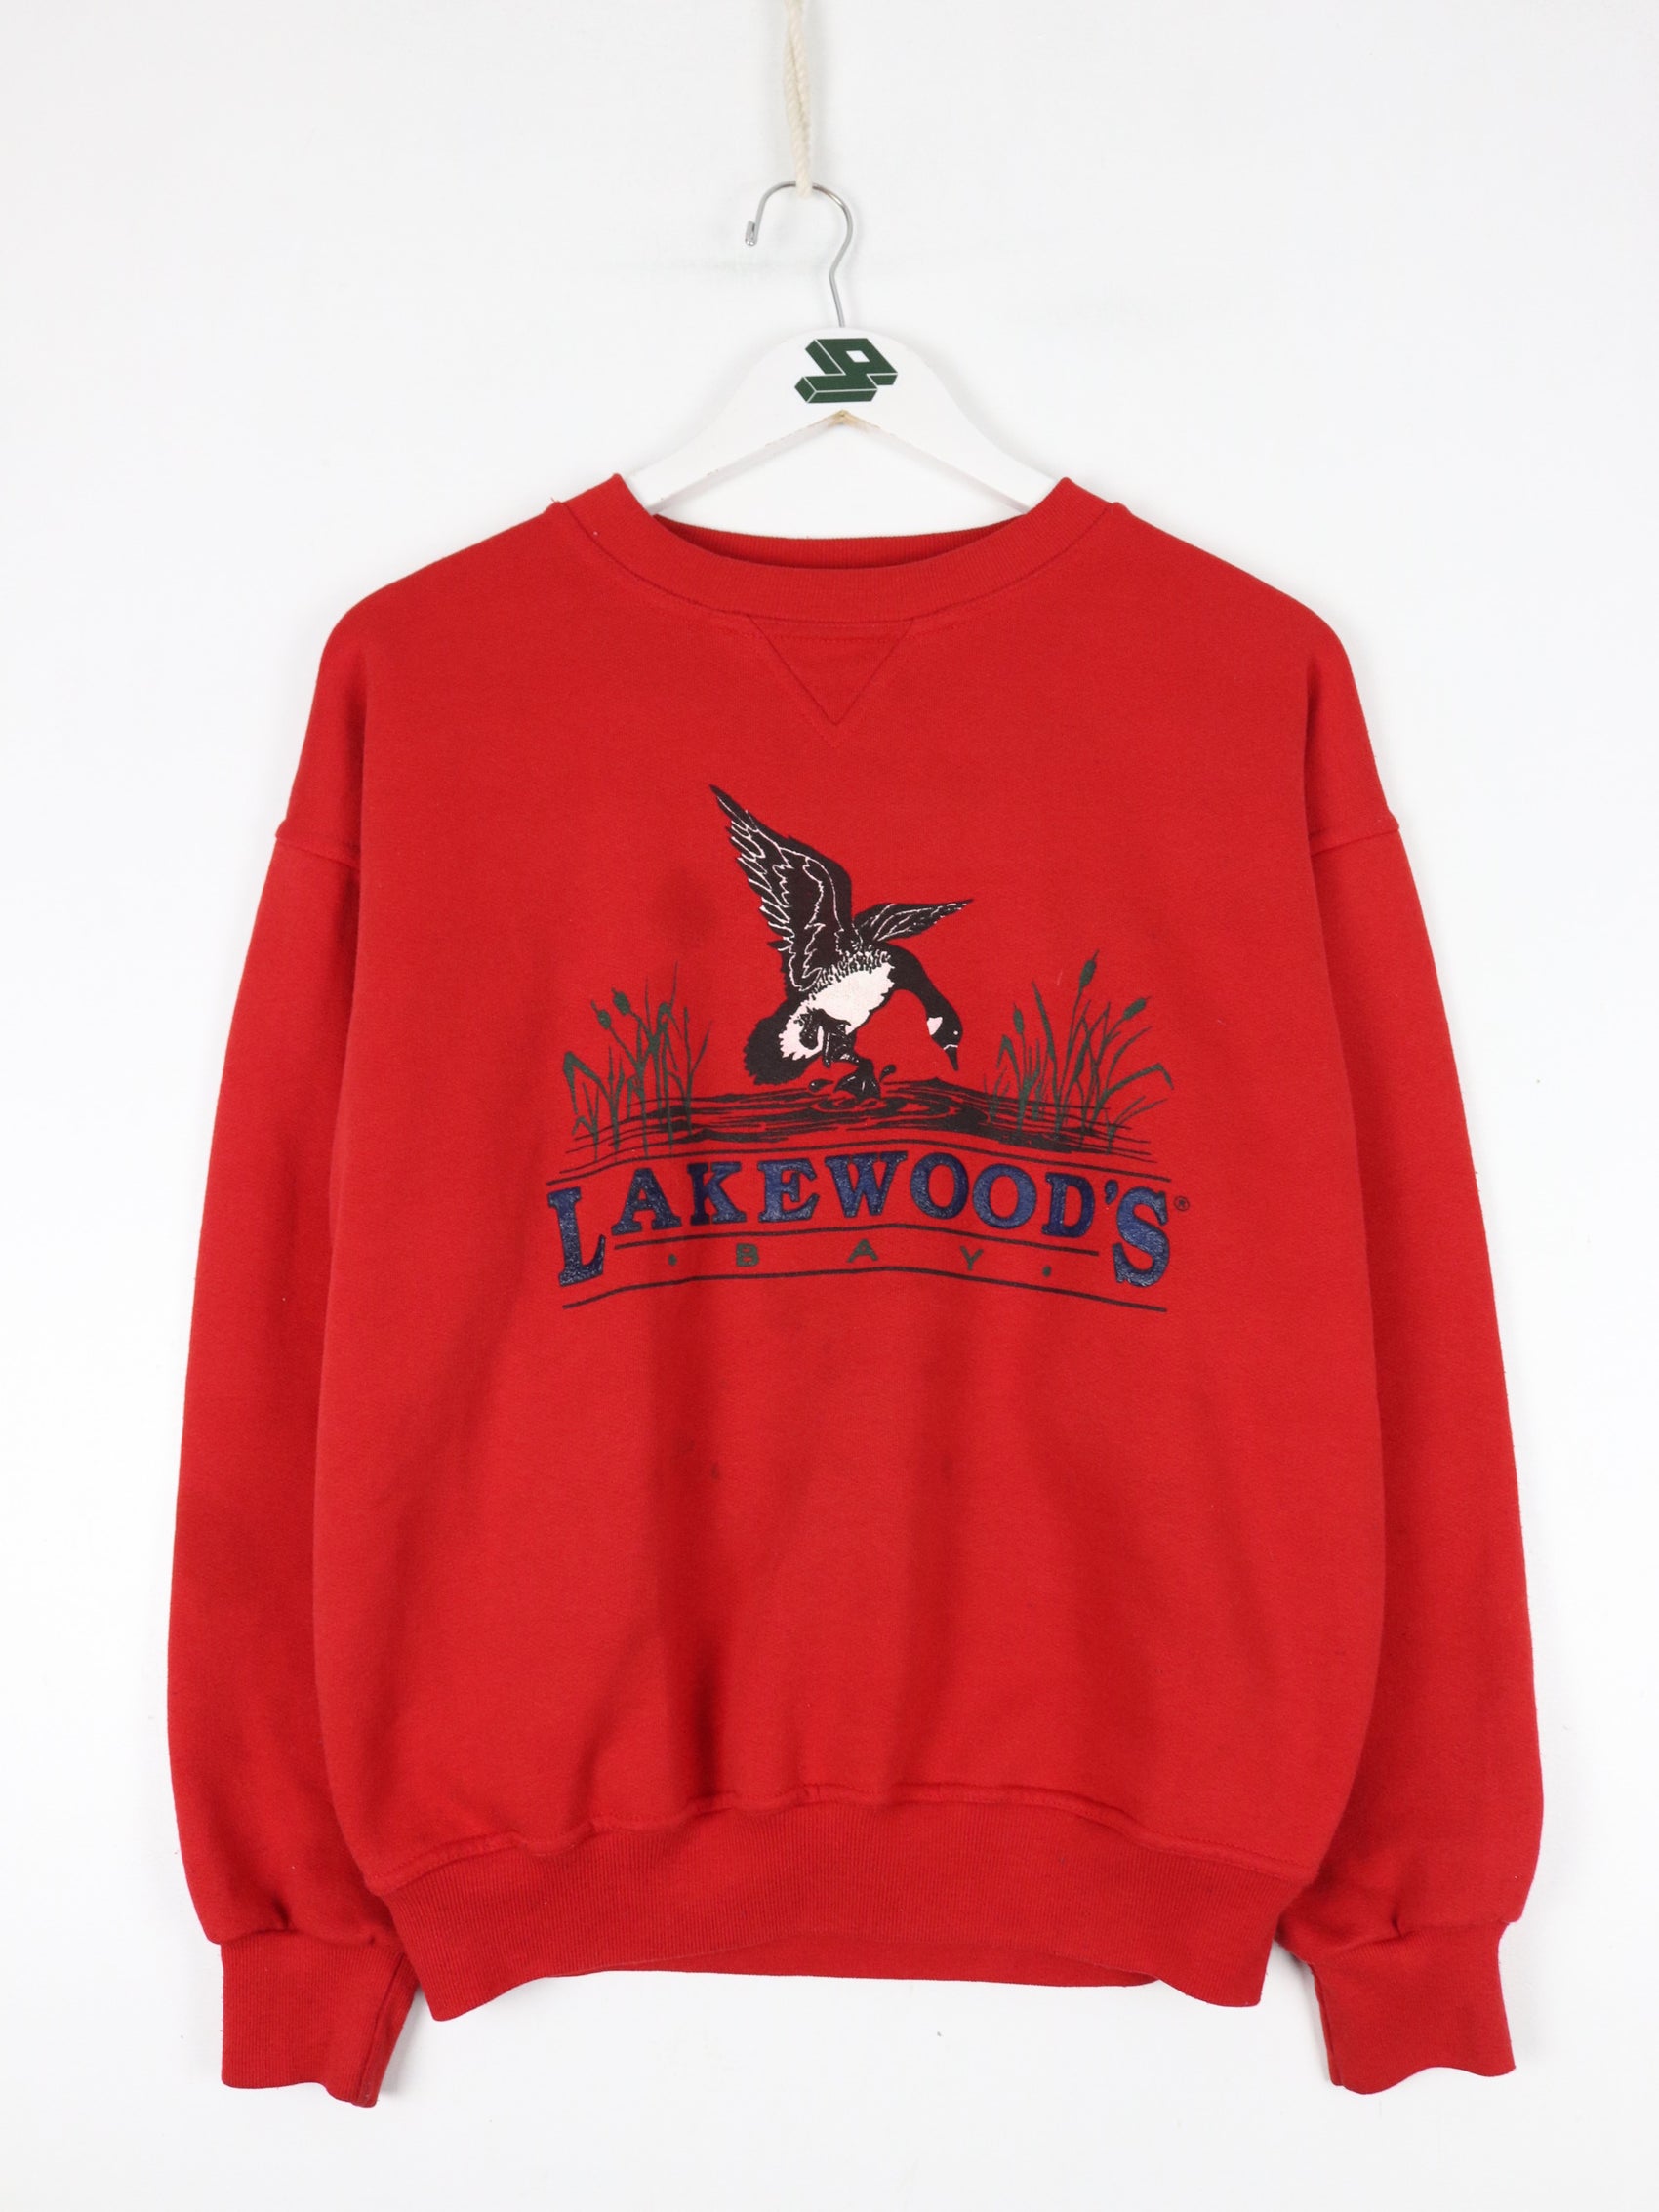 Vintage Lakewood's Bay Sweatshirt Mens Small Red 90s